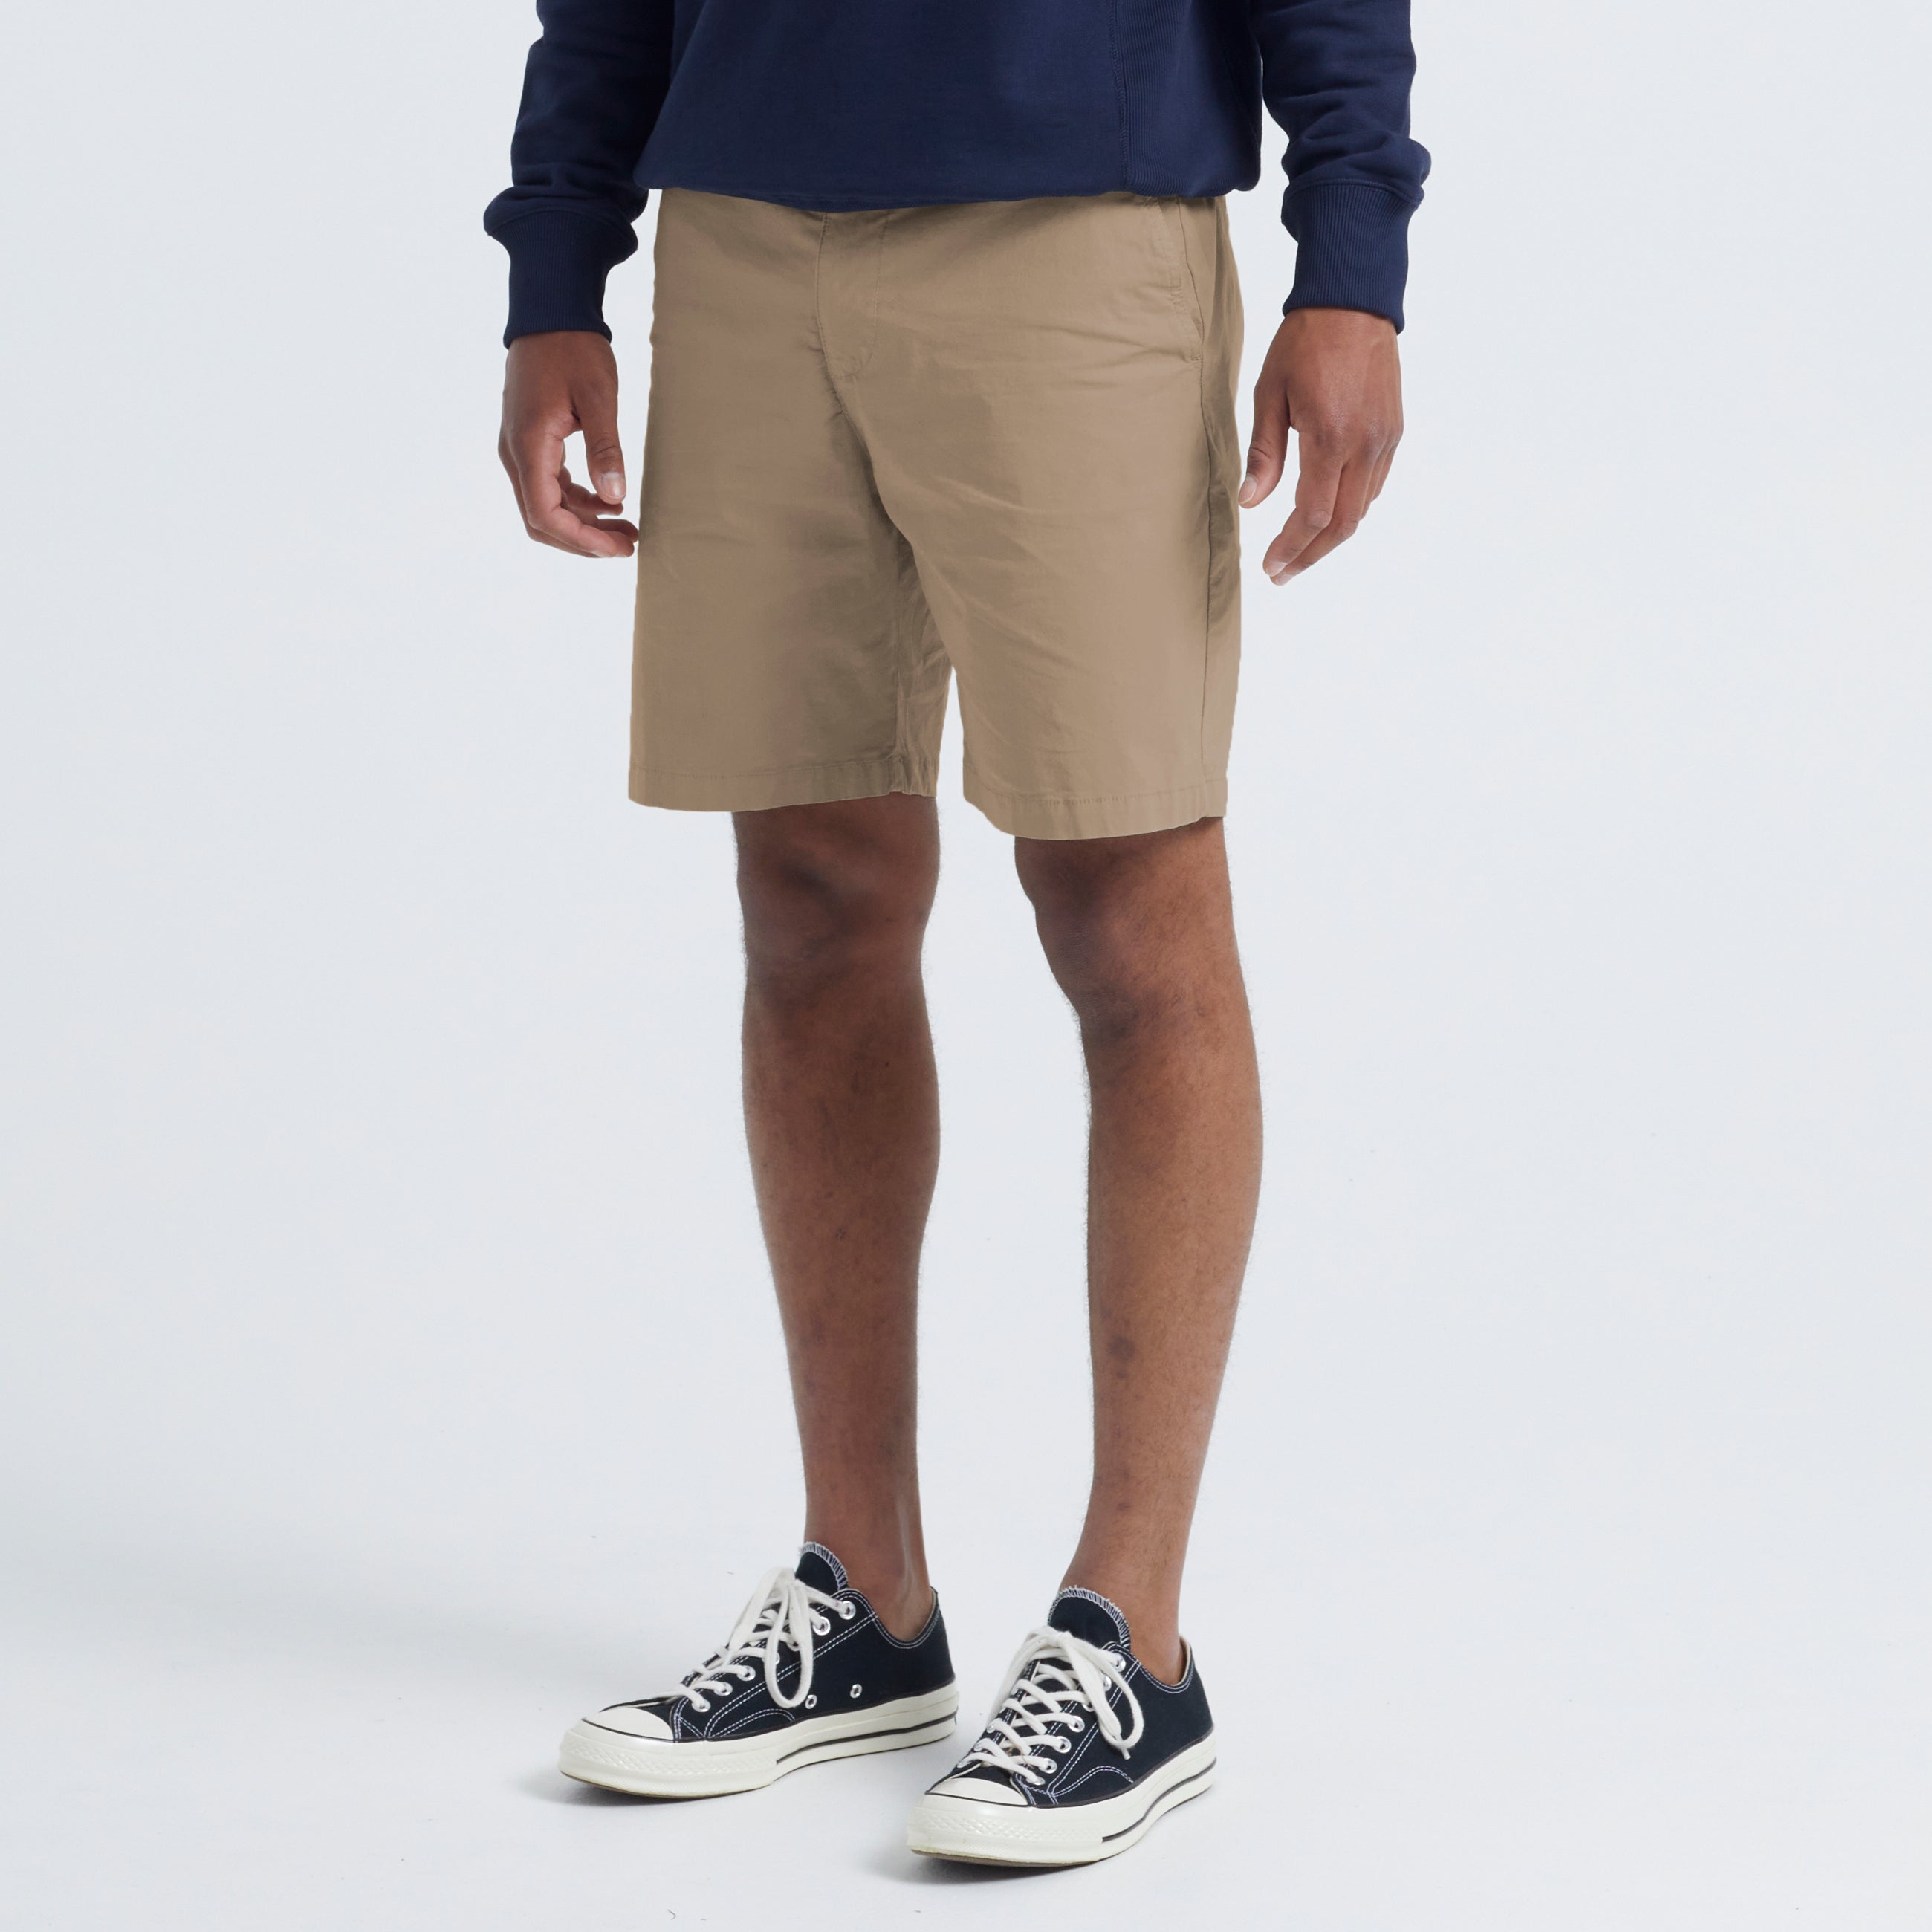 By Garment Makers Gideon Light bomuldshorts Shorts Shorts 2851 Khaki